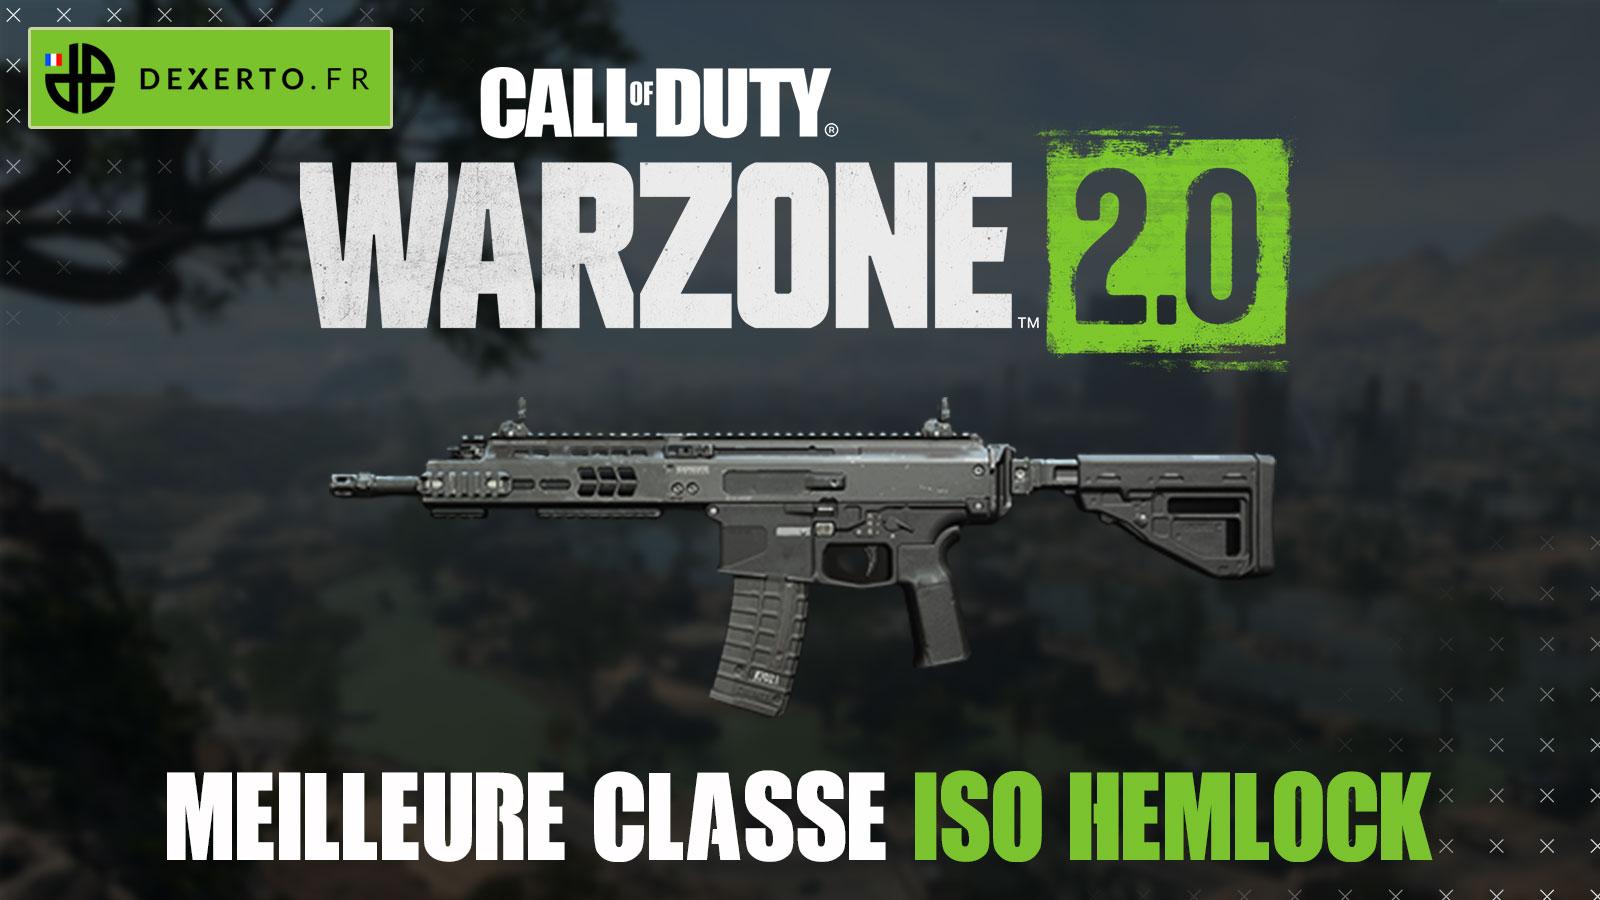 Warzone 2 ISO Hemlock meilleure classe